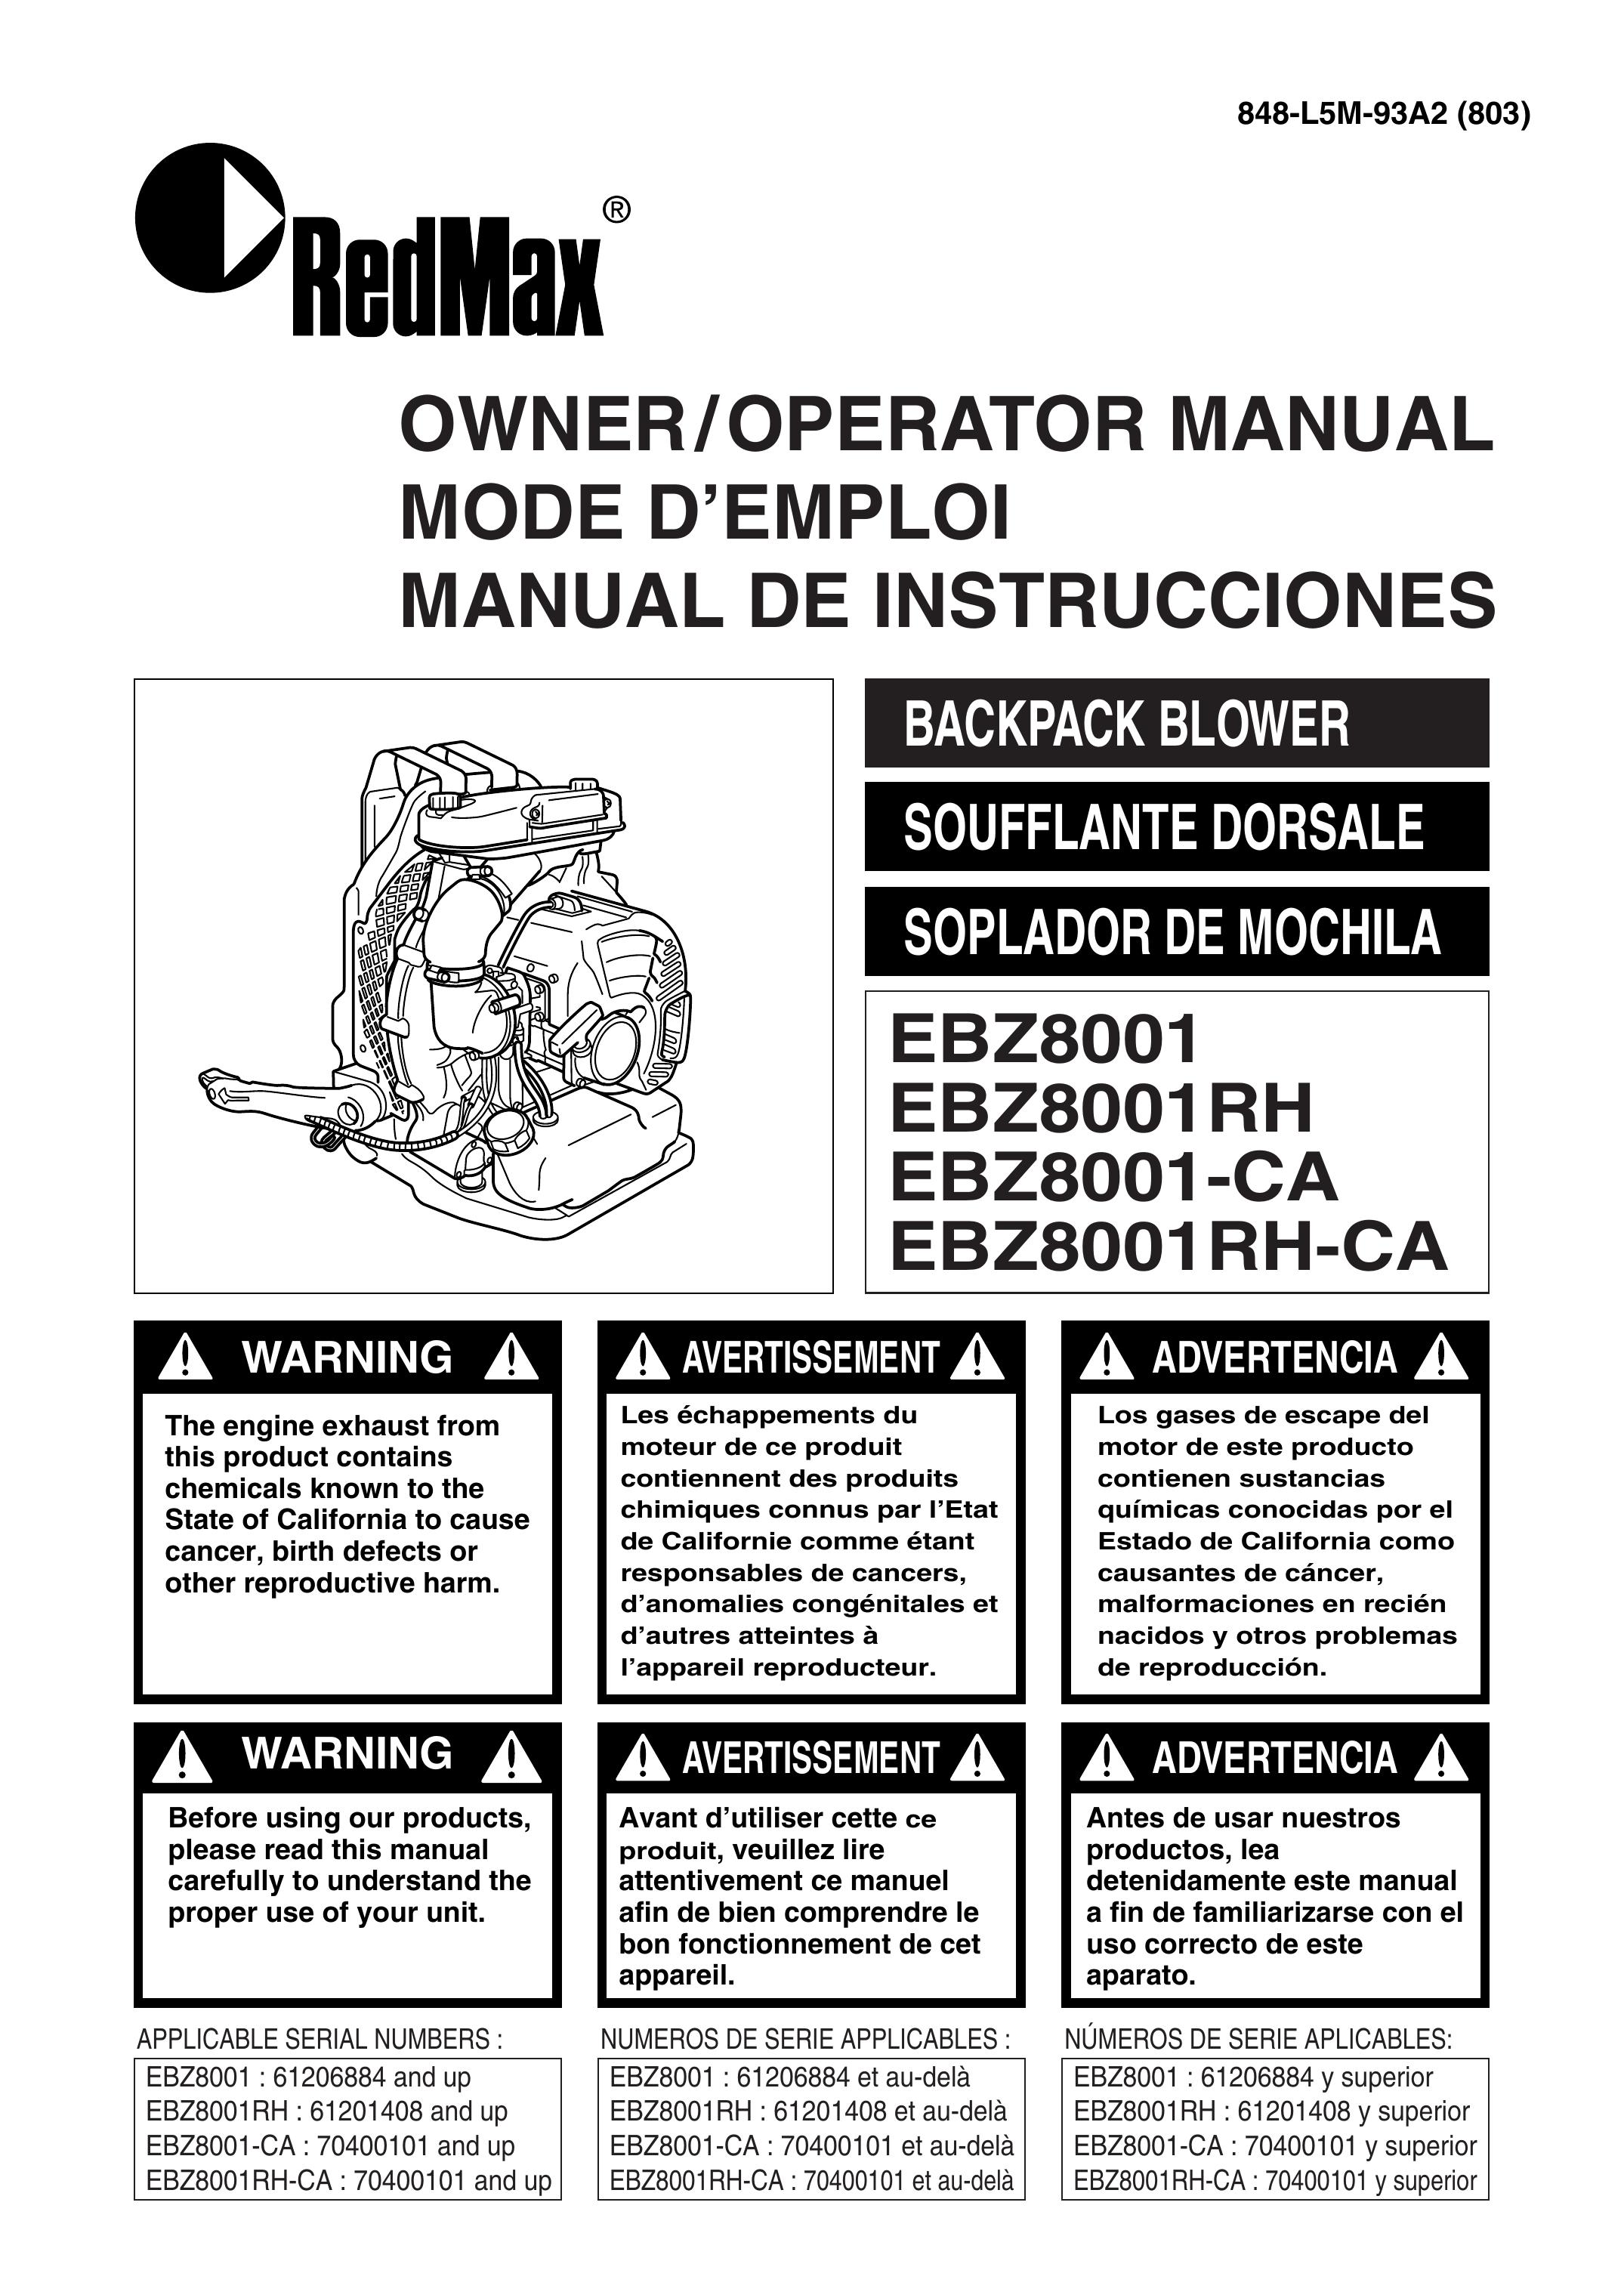 RedMax EBZ8001RH Blower User Manual